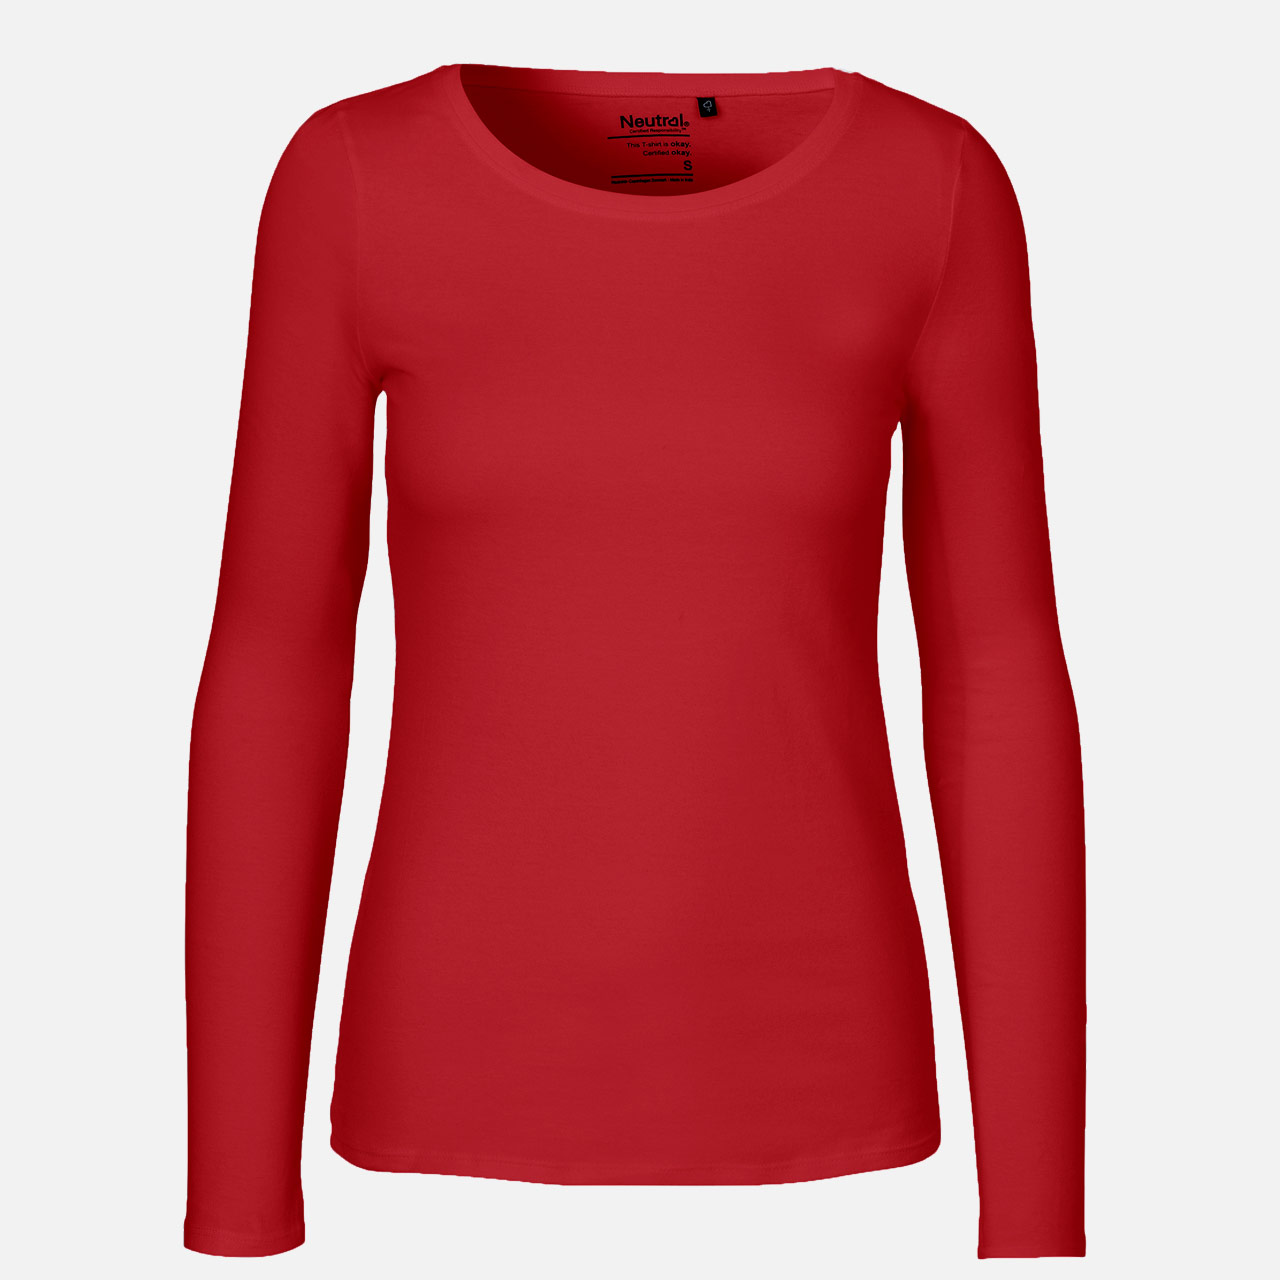 Doppelpack Ladies Long Sleeve Shirt - Weiss / Rot XL Weiss / Rot